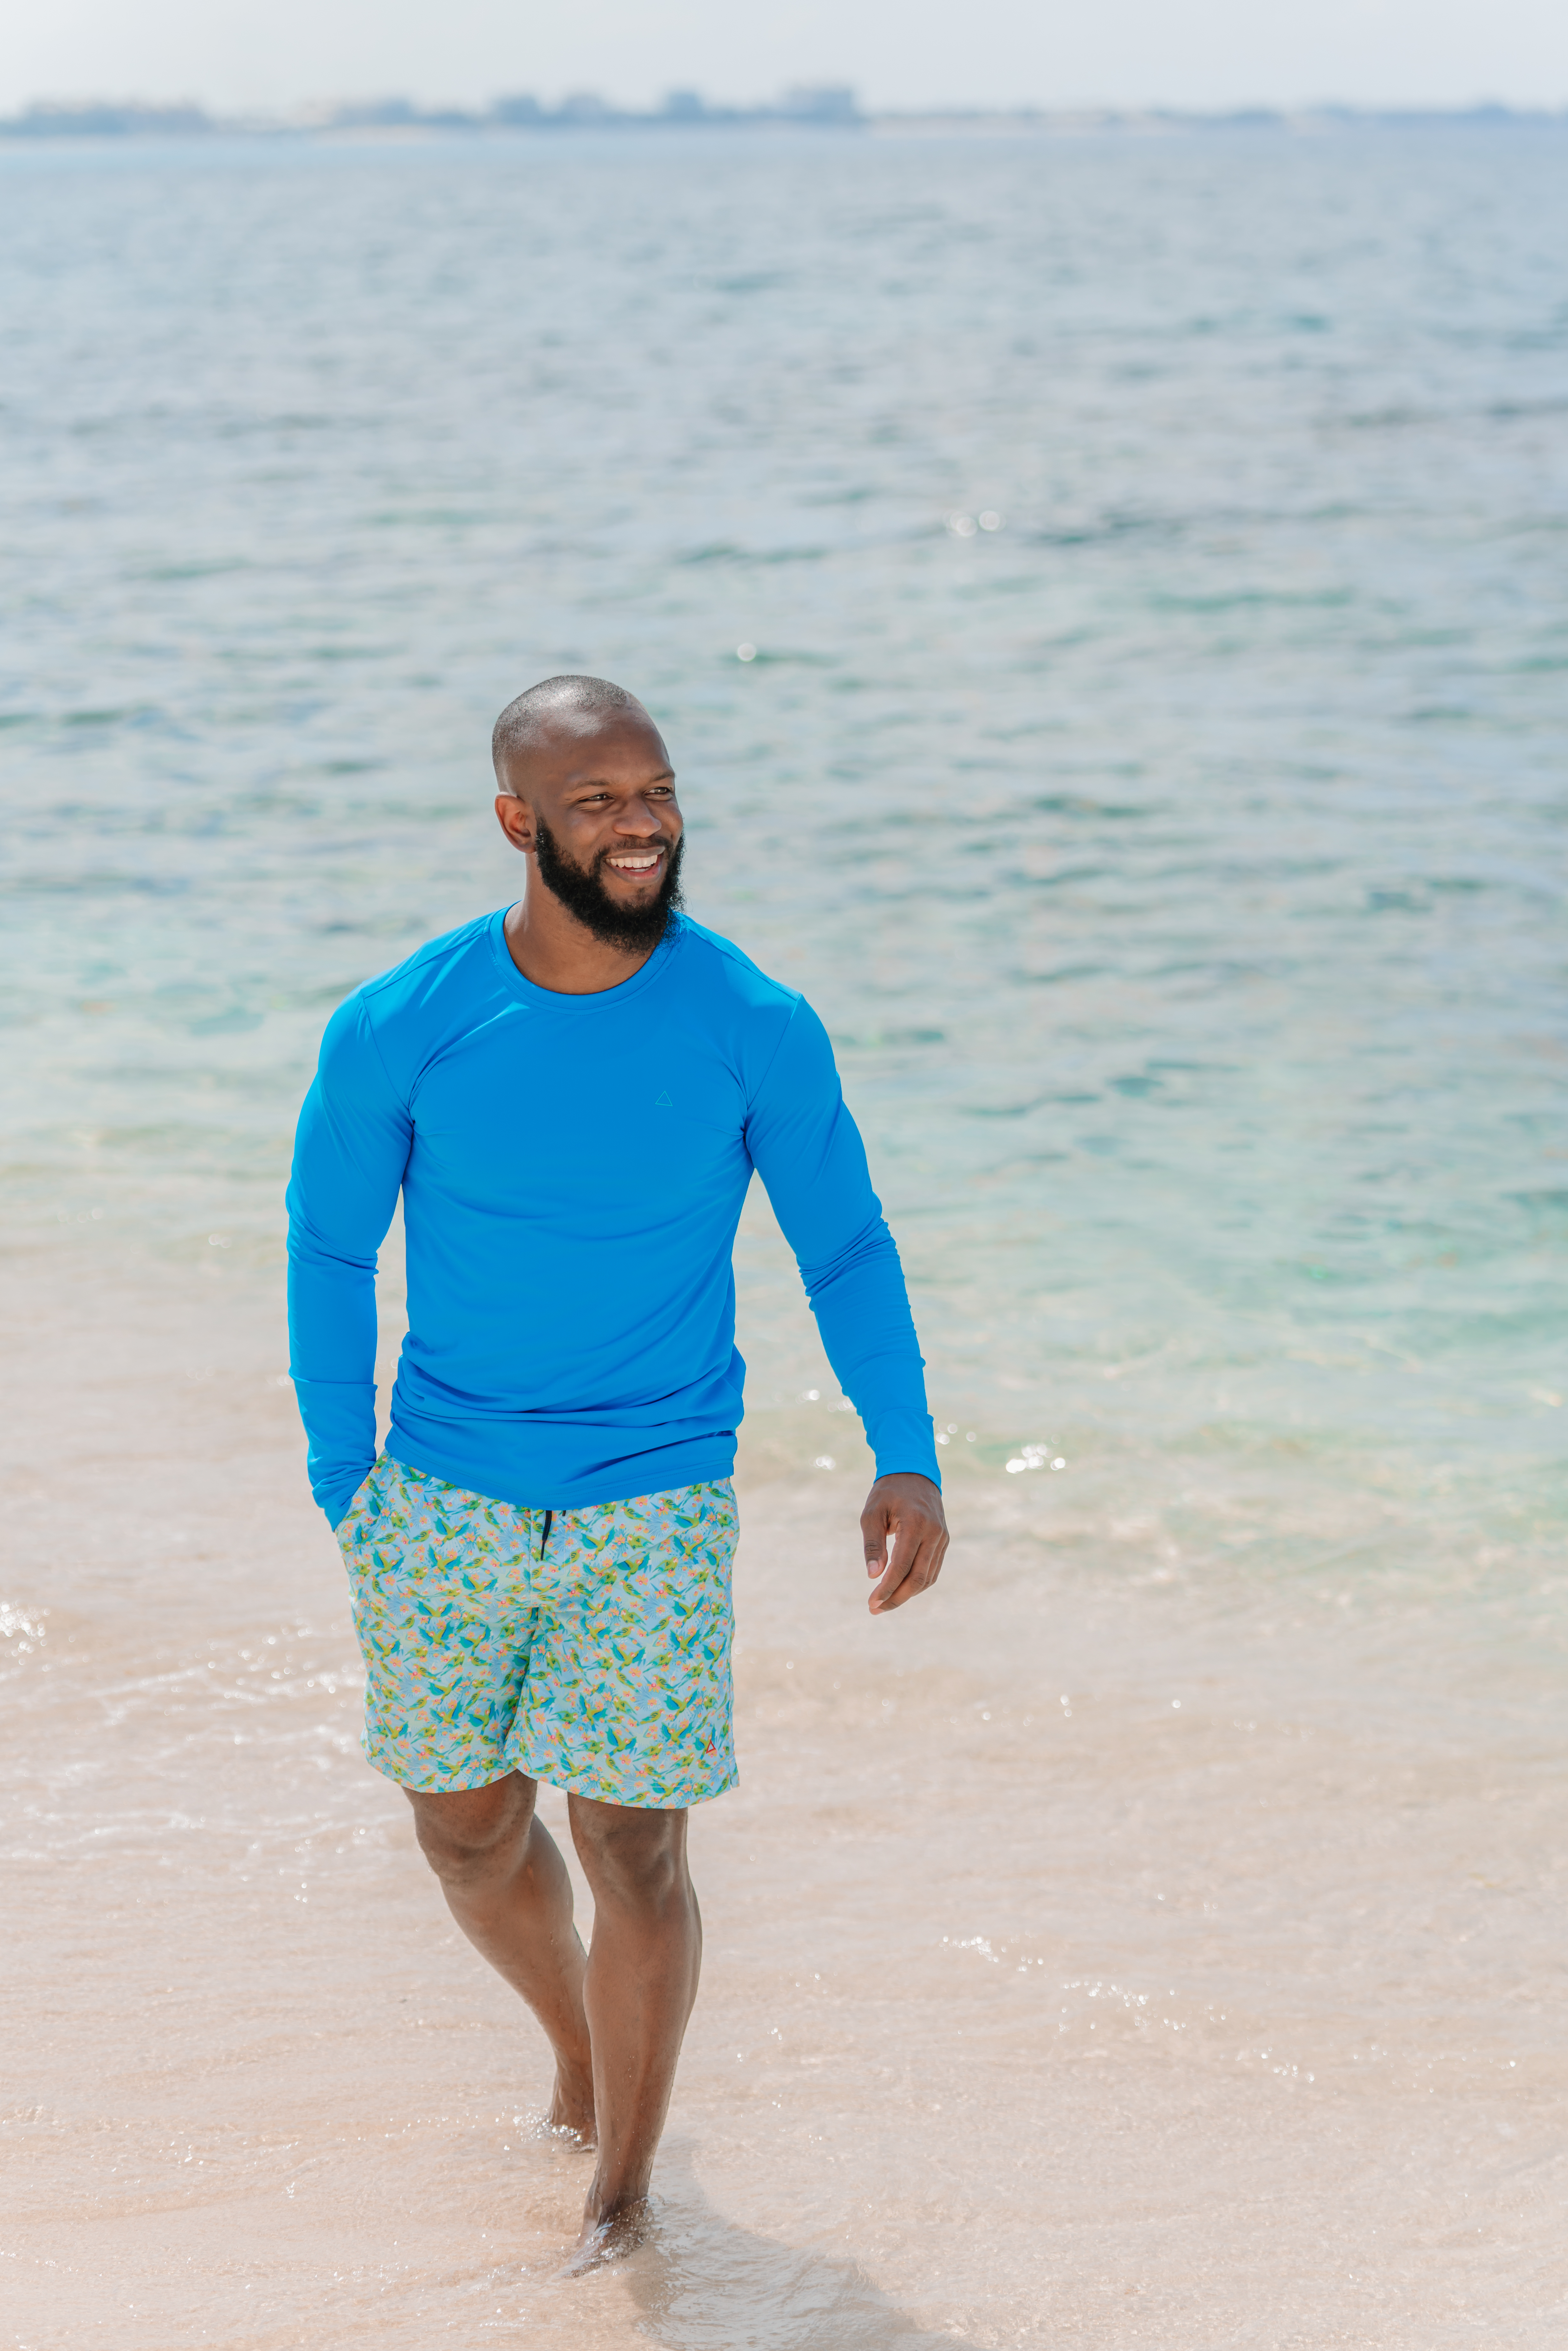 Black man walking on the beach in blue shirt